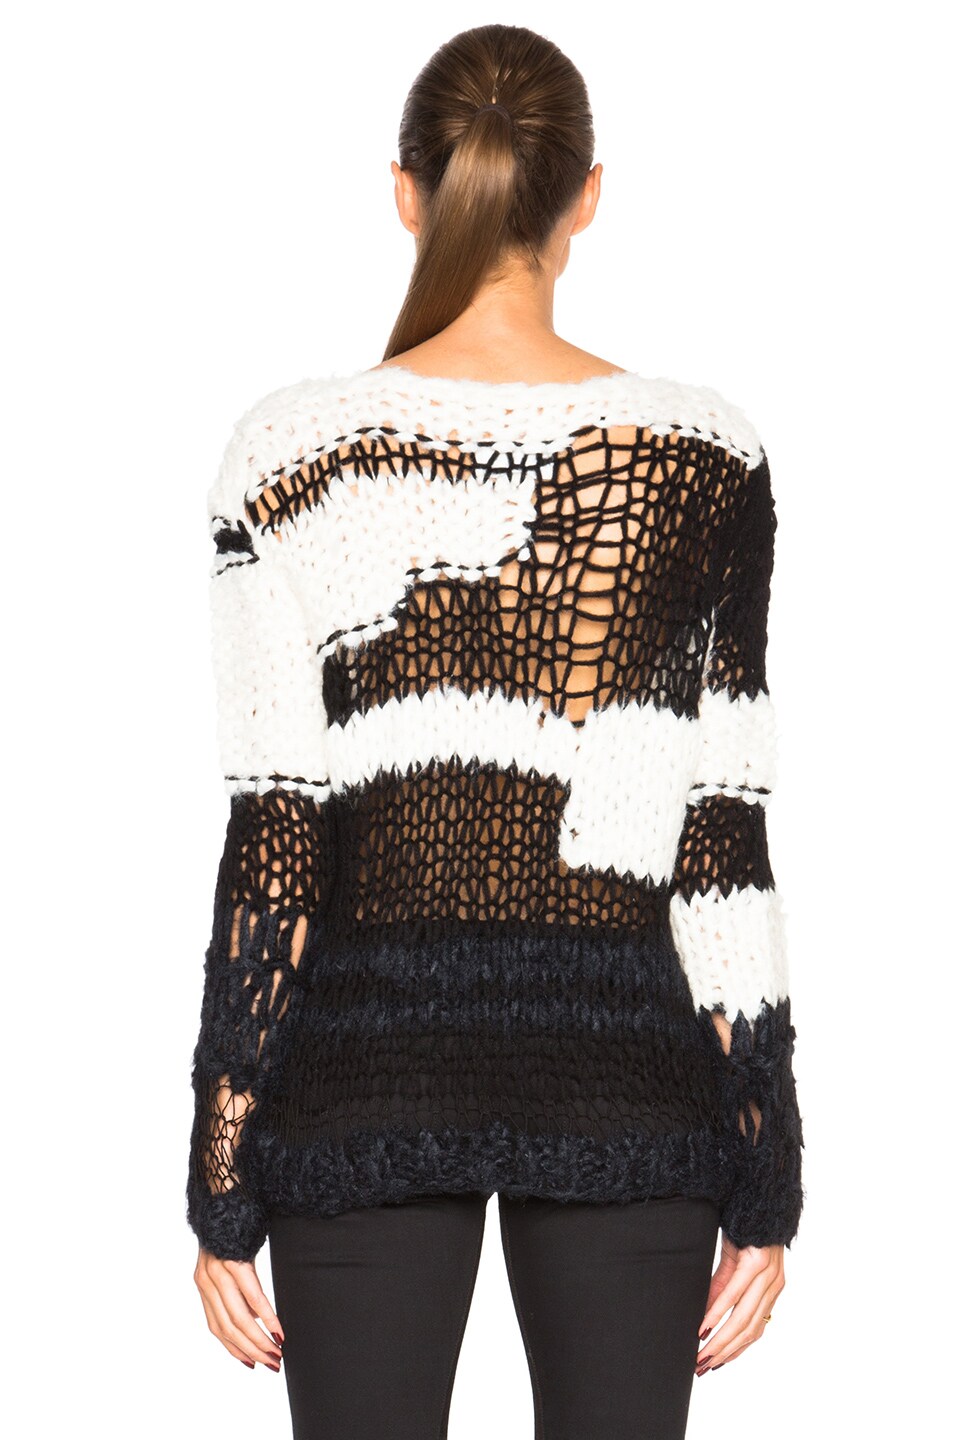 Maison Margiela Hand Made Sweater in Black & Beige | FWRD